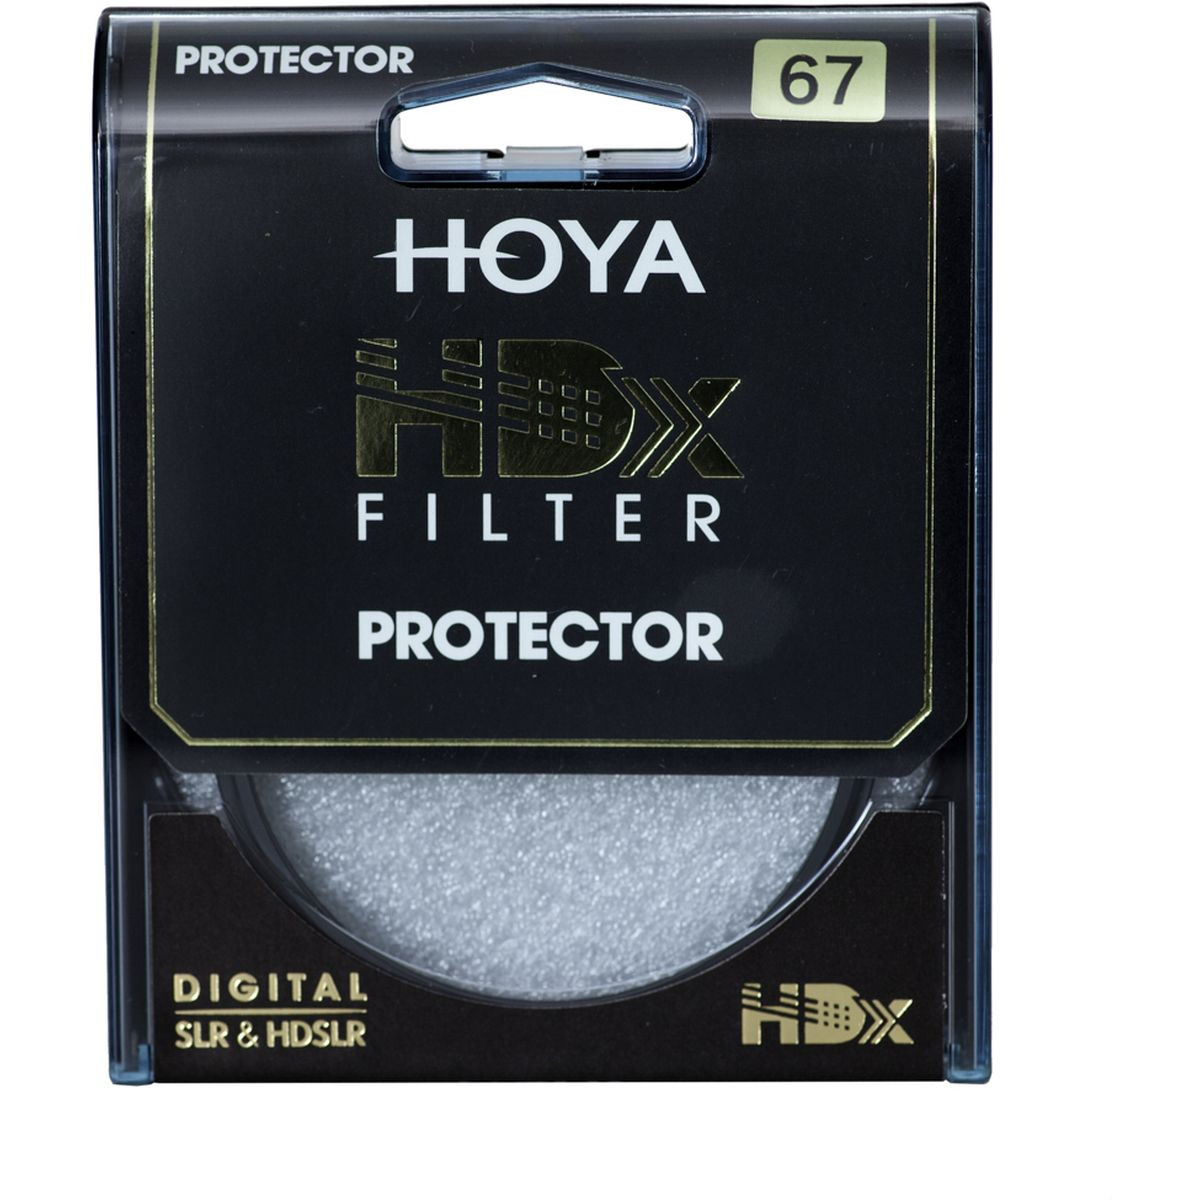 Hoya 67.0mm HDX Protector